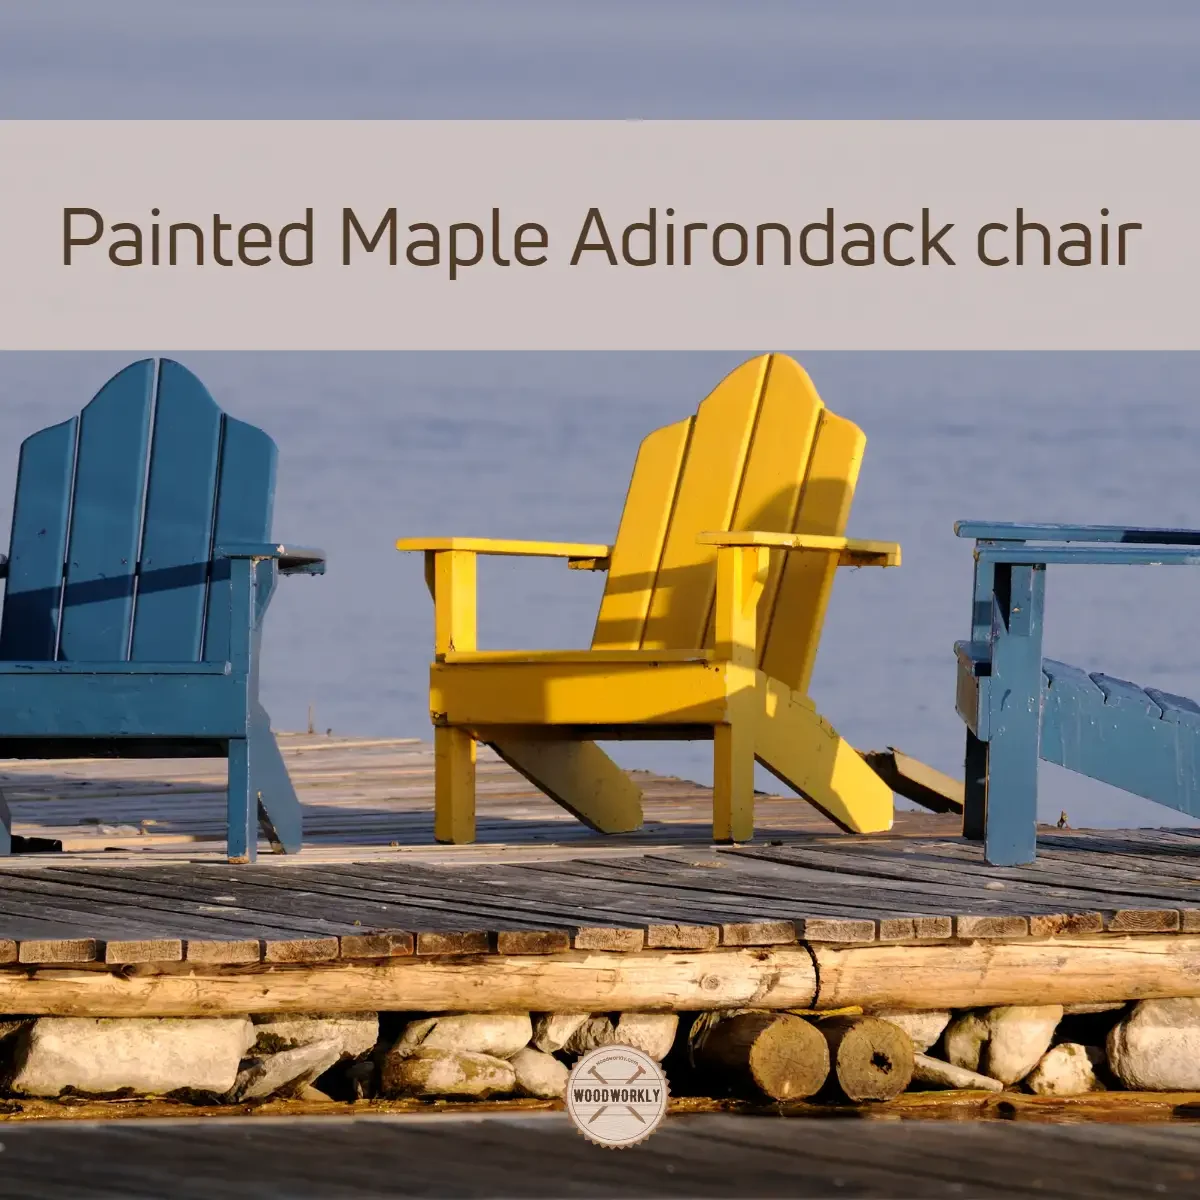 Painted Maple Adirondack chair